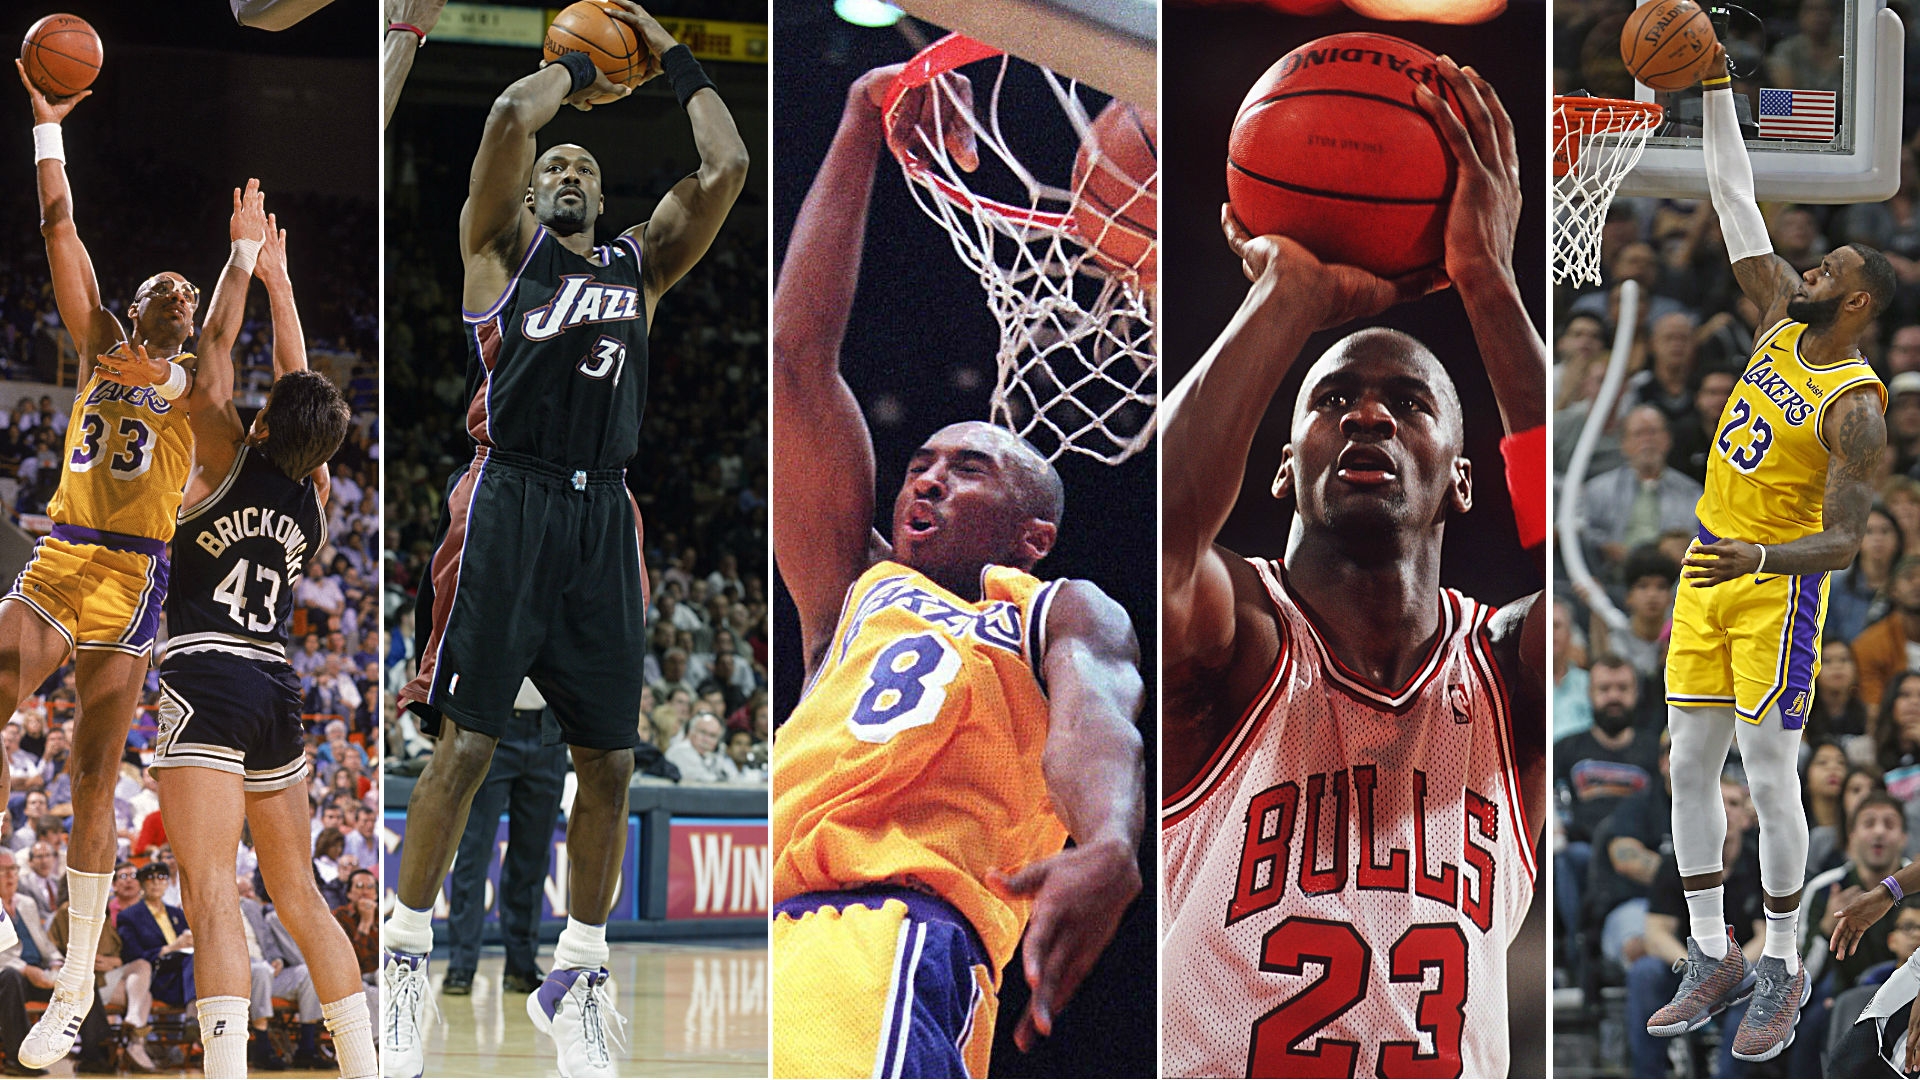 NBA news, scores, rumors and more | Sporting News